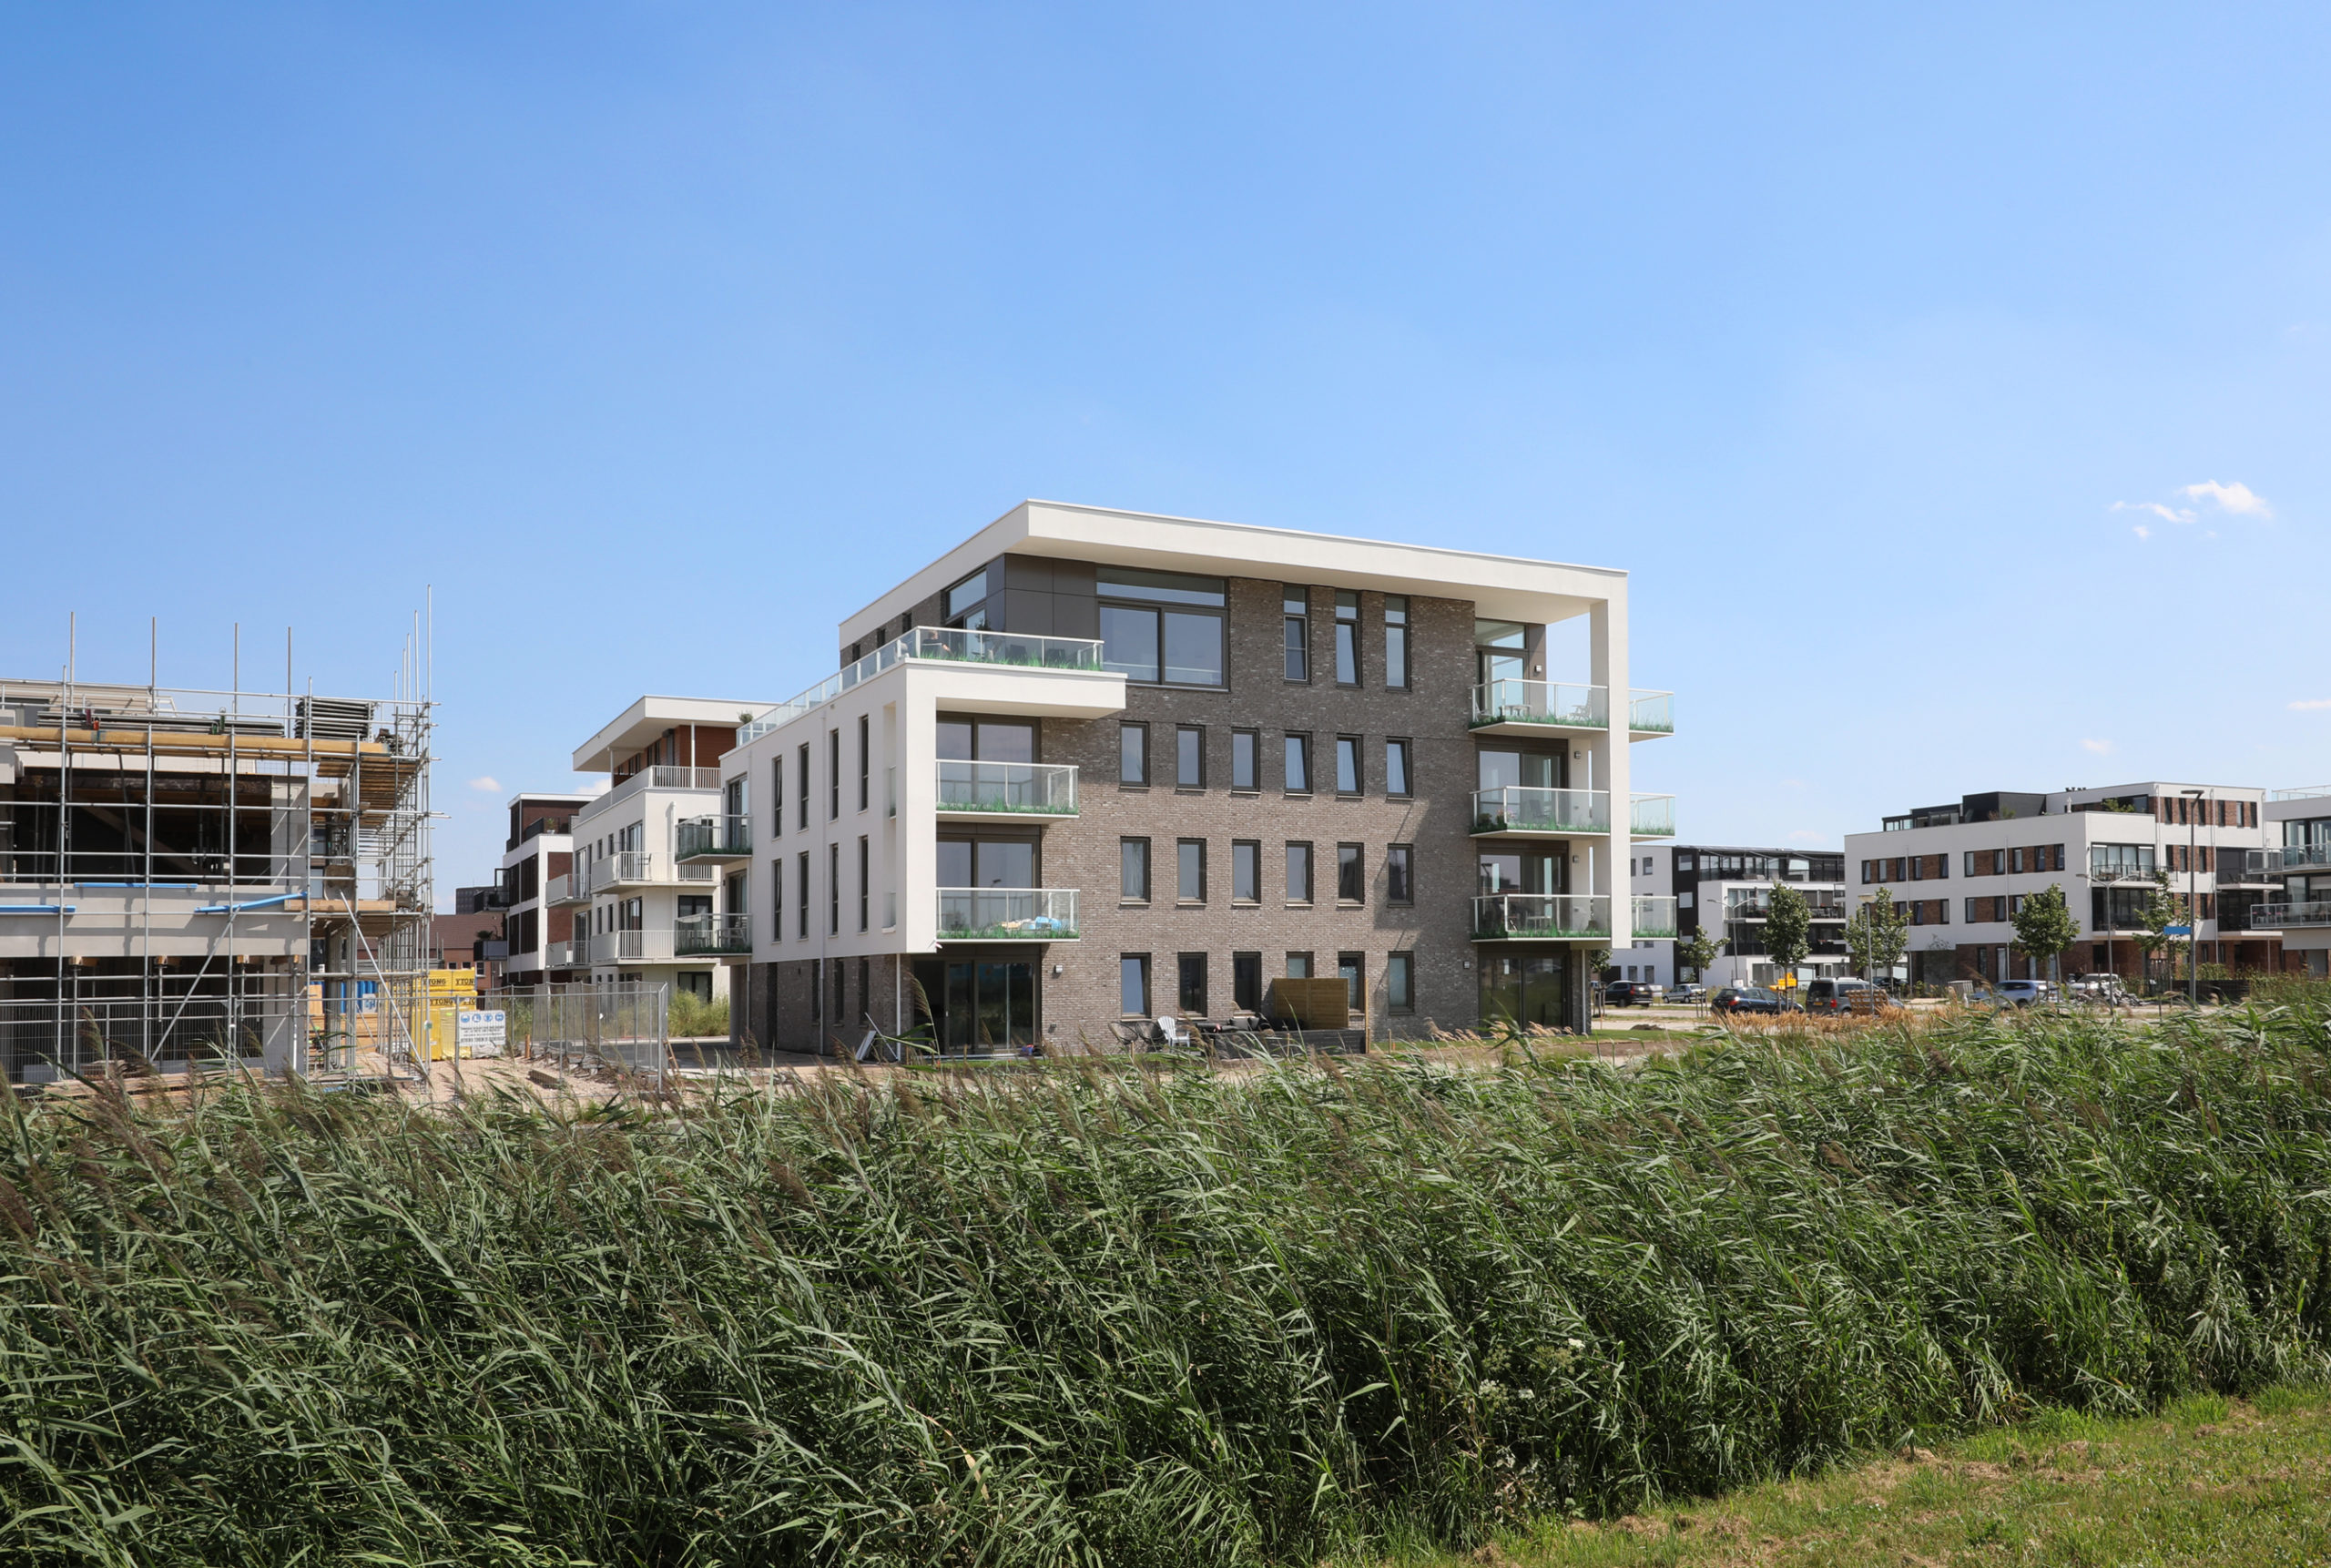 Appartementen complex Freestate Building Almere Poort | Olof Architects